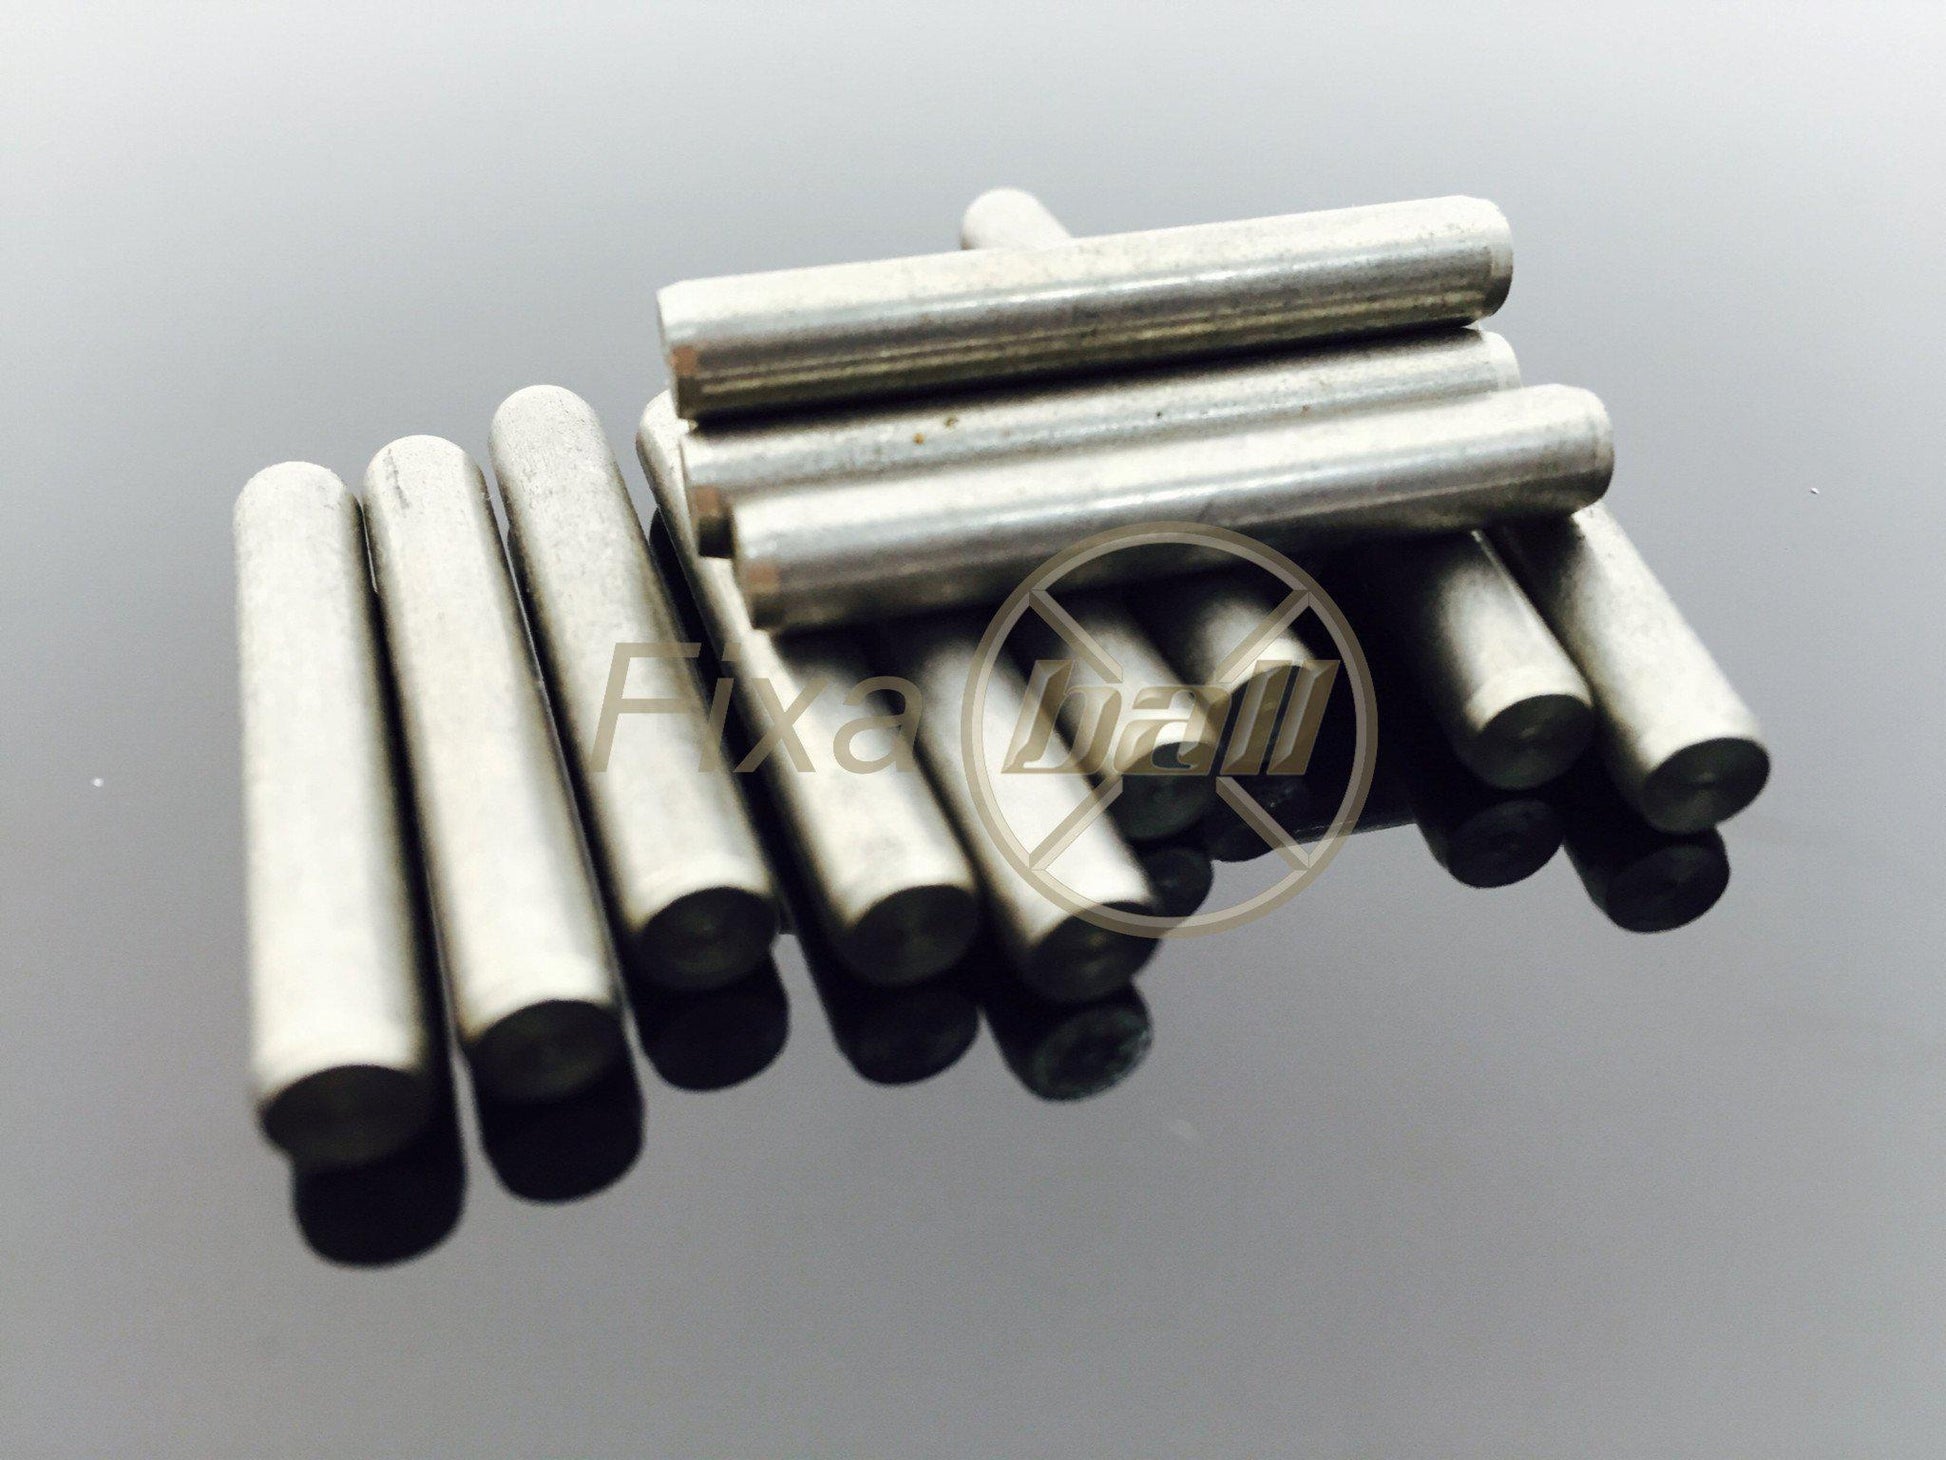 M8, Dowel Pins, A2/ 304 Stainless Steel, DIN 7. Dowel Pins M8, Dowel Pins, A2/ 304 Stainless Steel, DIN 7. Dowel Pins - A2/ 304 Stainless Steel